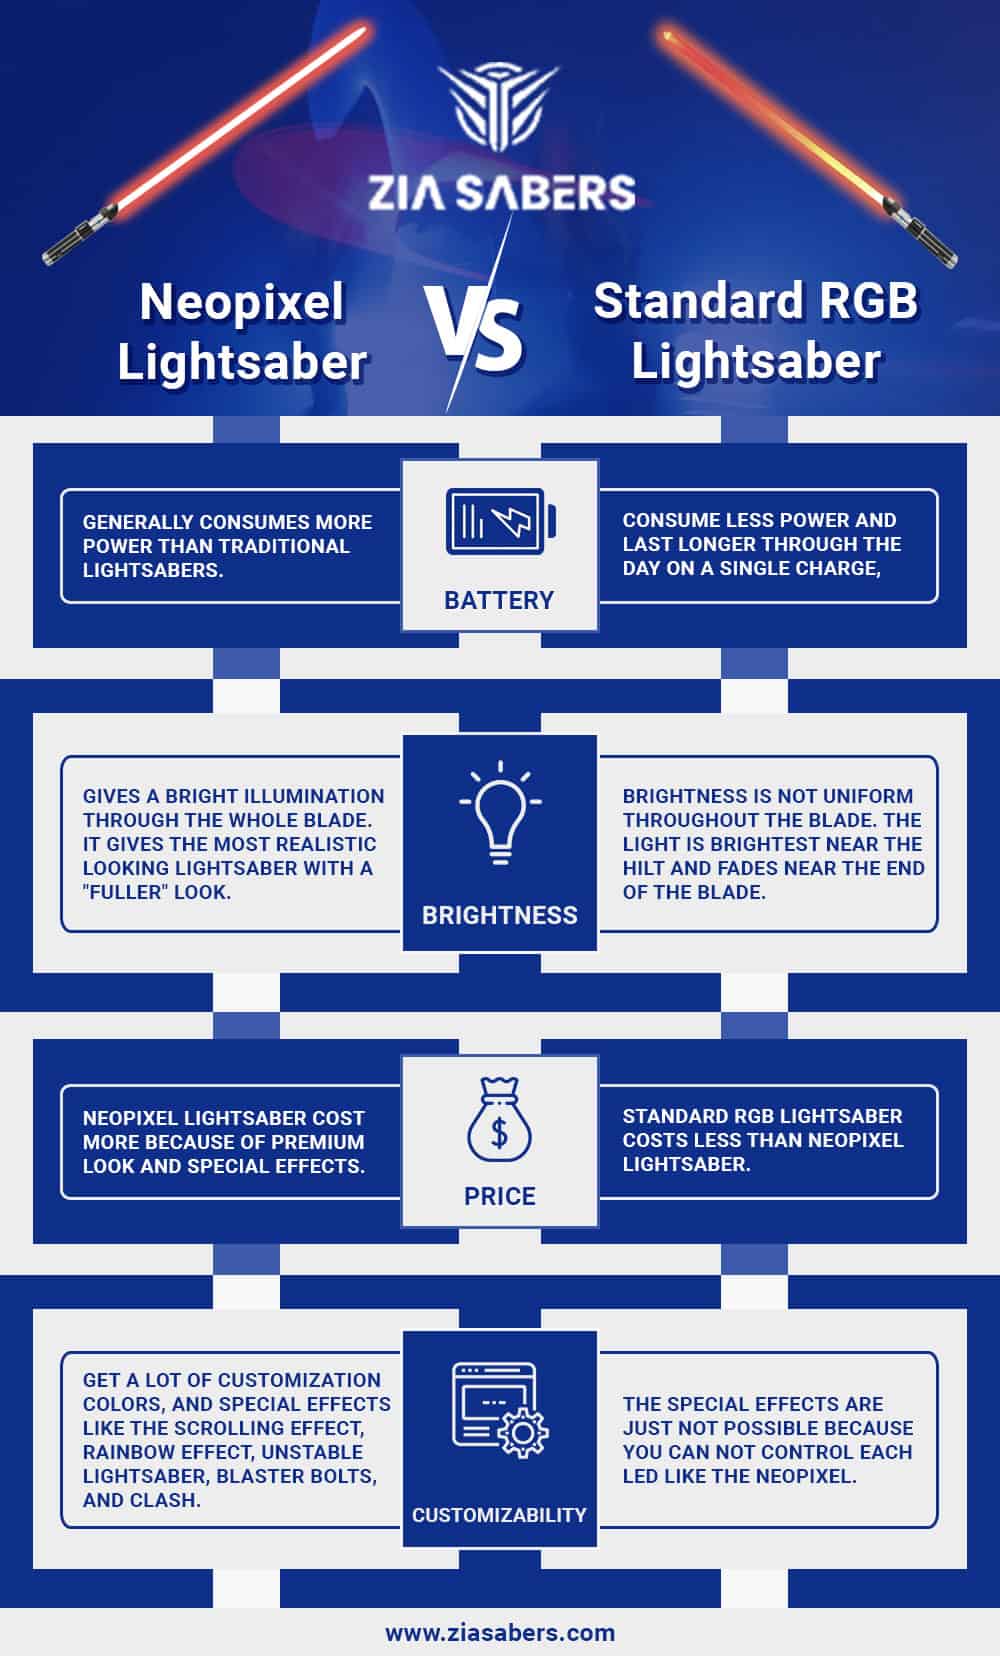 Neopixel Lightsaber vs Standard RGB Lightsaber